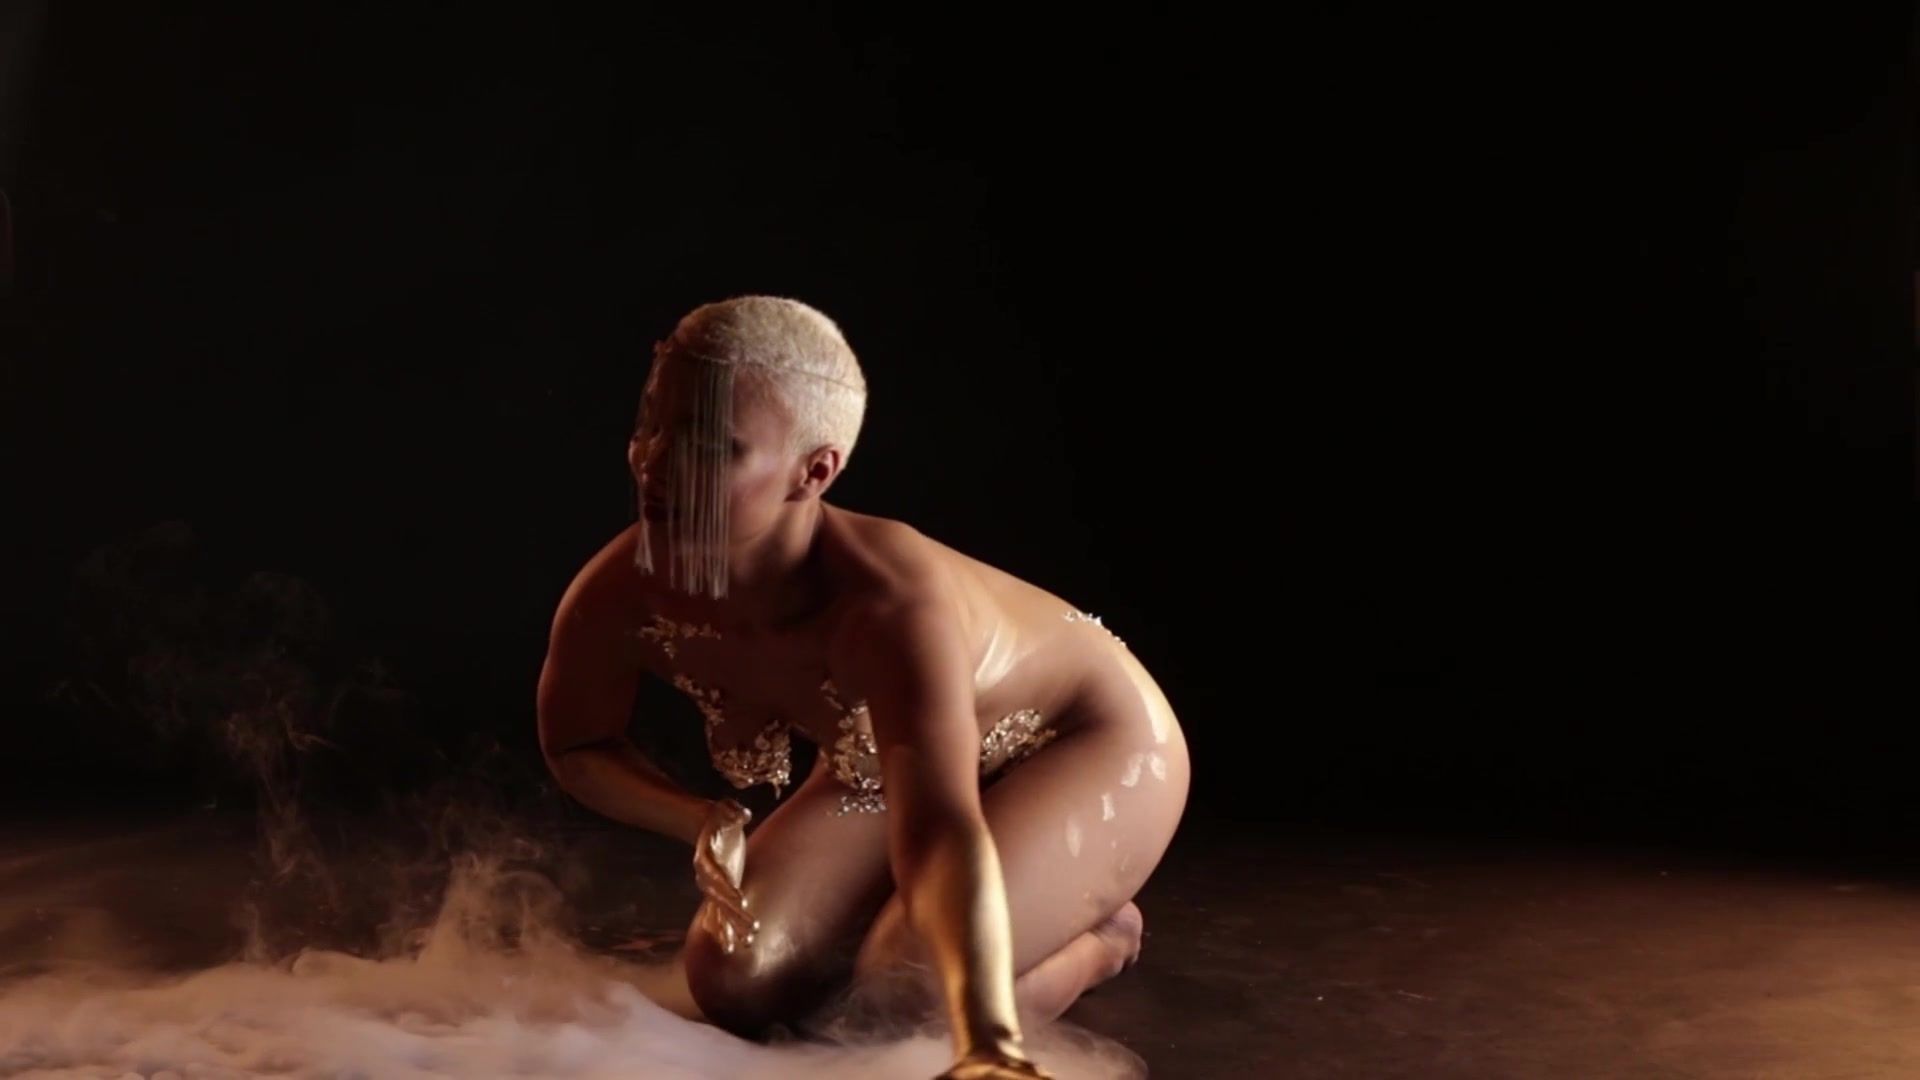 Tease Naked on Stage Performance - Ufo Extreme Gold Art Free Amature